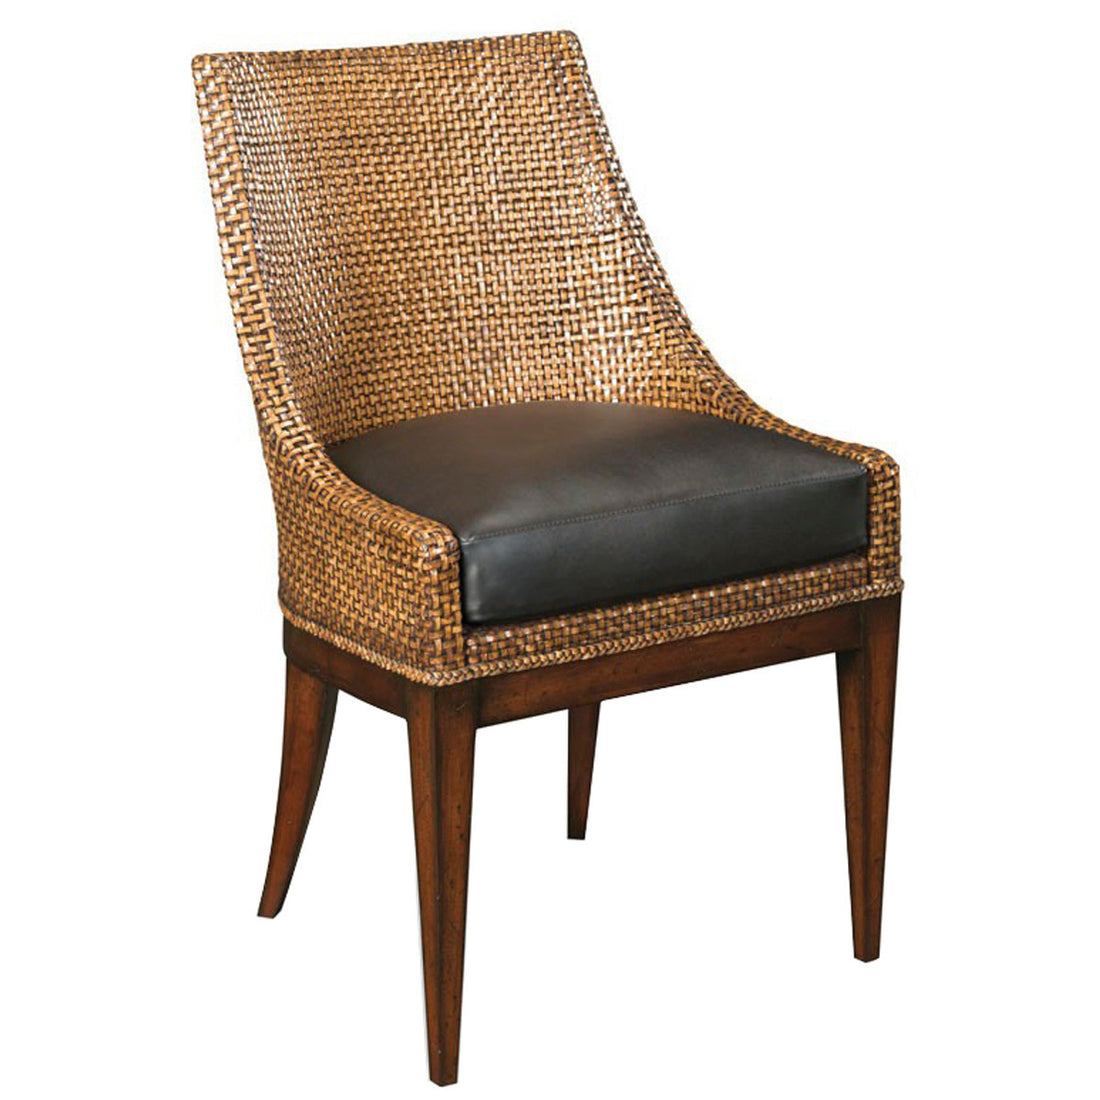 Woodbridge Furniture Woven Leather Chair